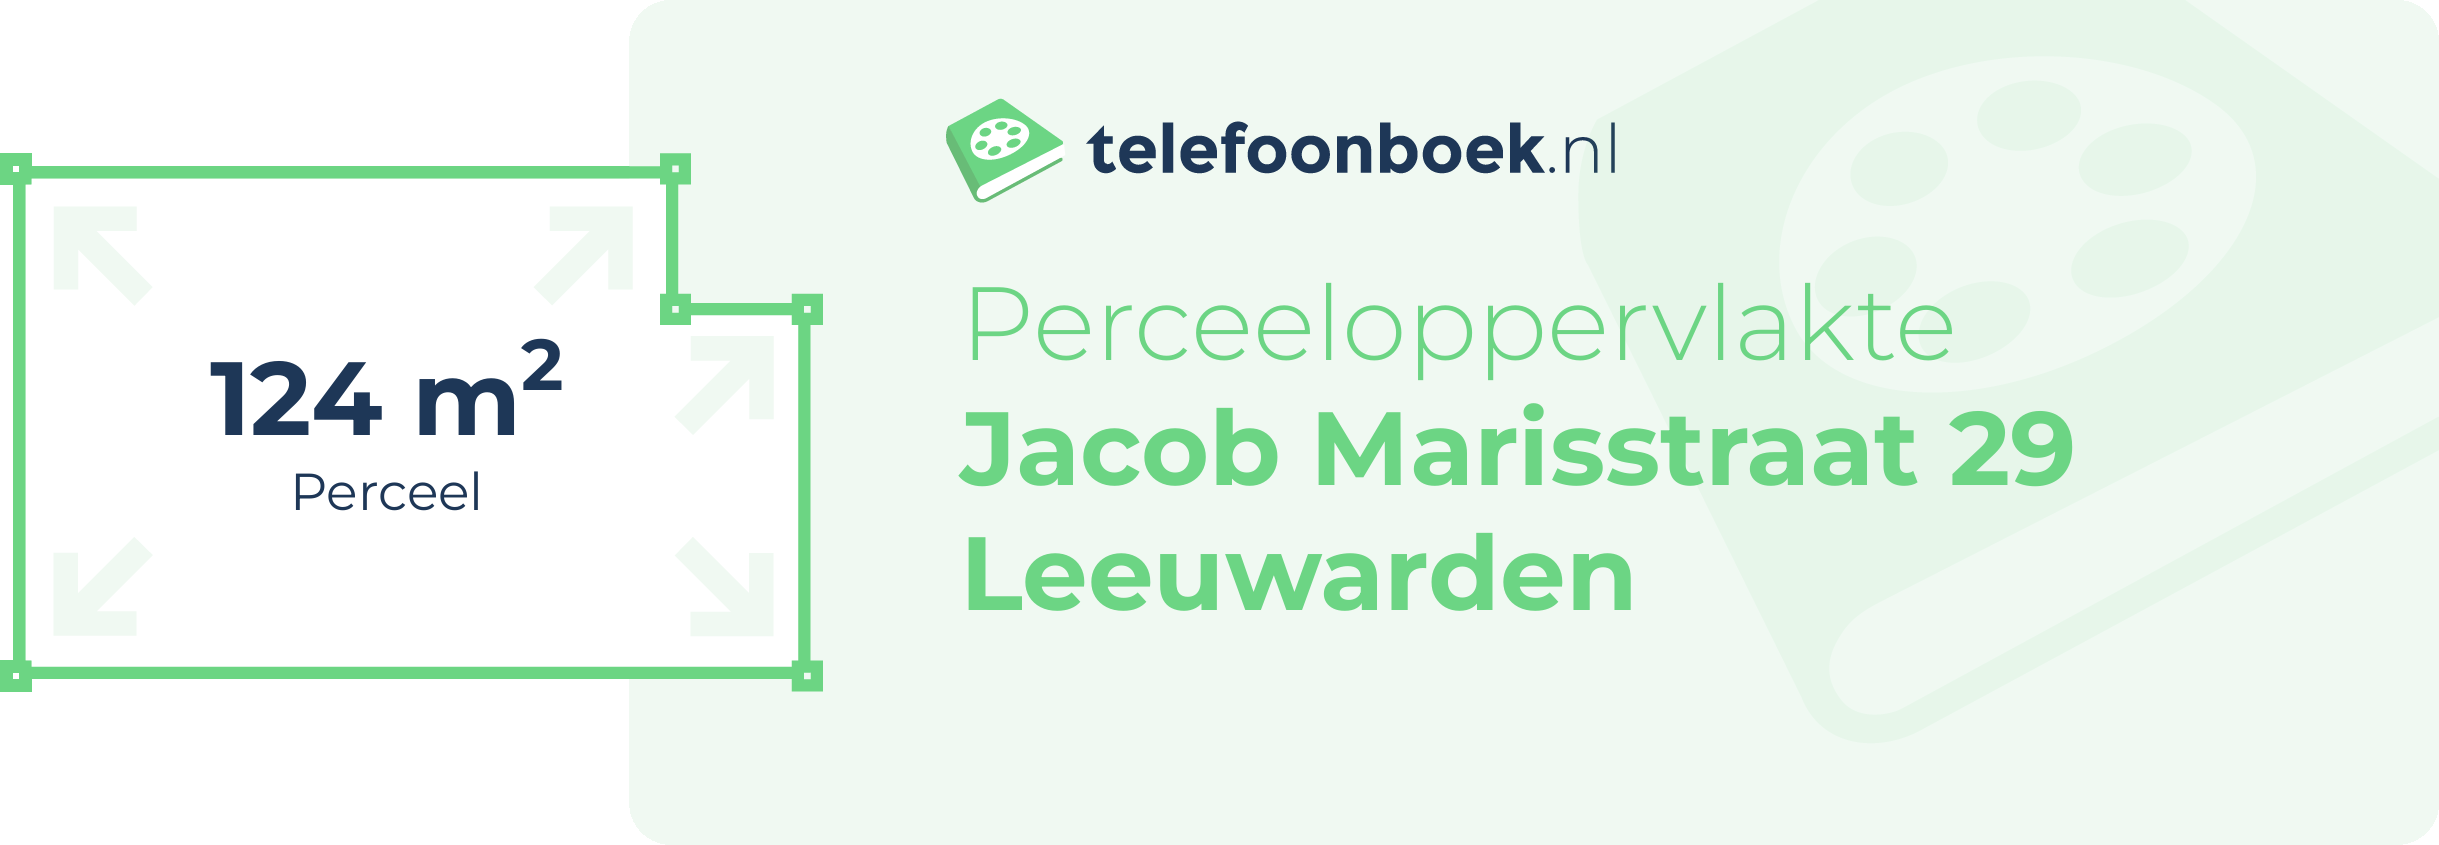 Perceeloppervlakte Jacob Marisstraat 29 Leeuwarden